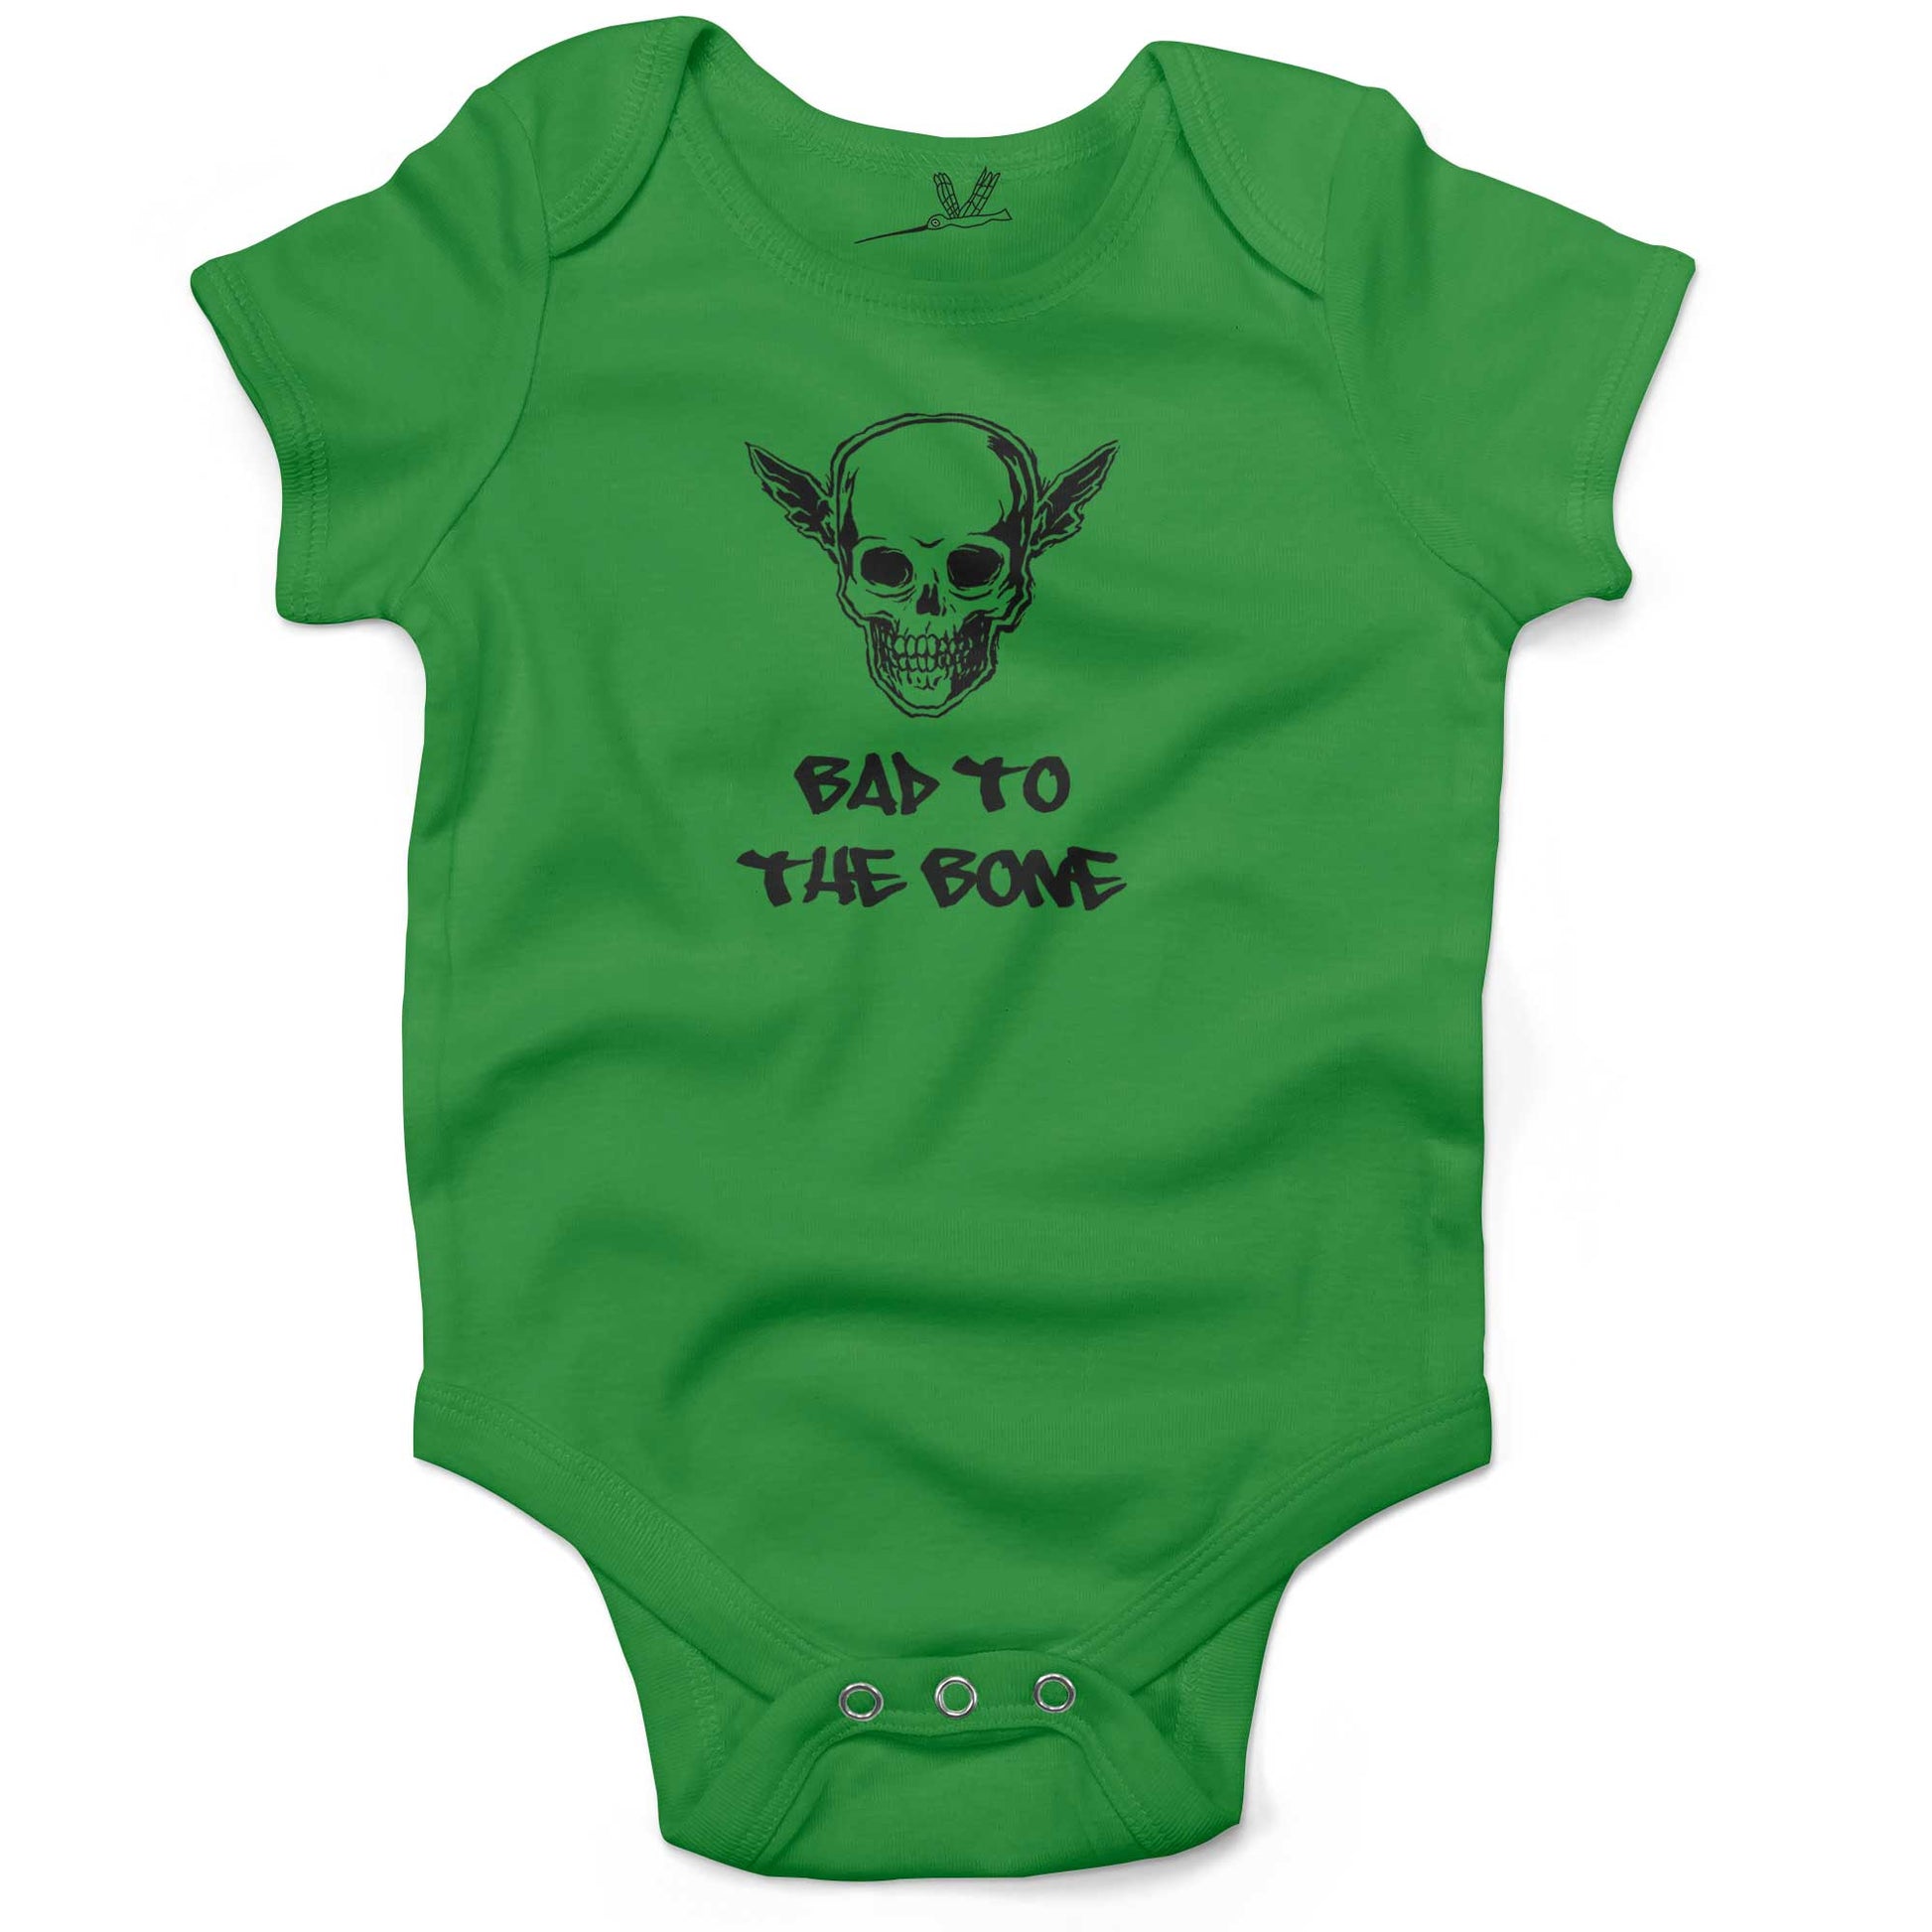 Bad To The Bone Infant Bodysuit or Raglan Tee-Grass Green-3-6 months